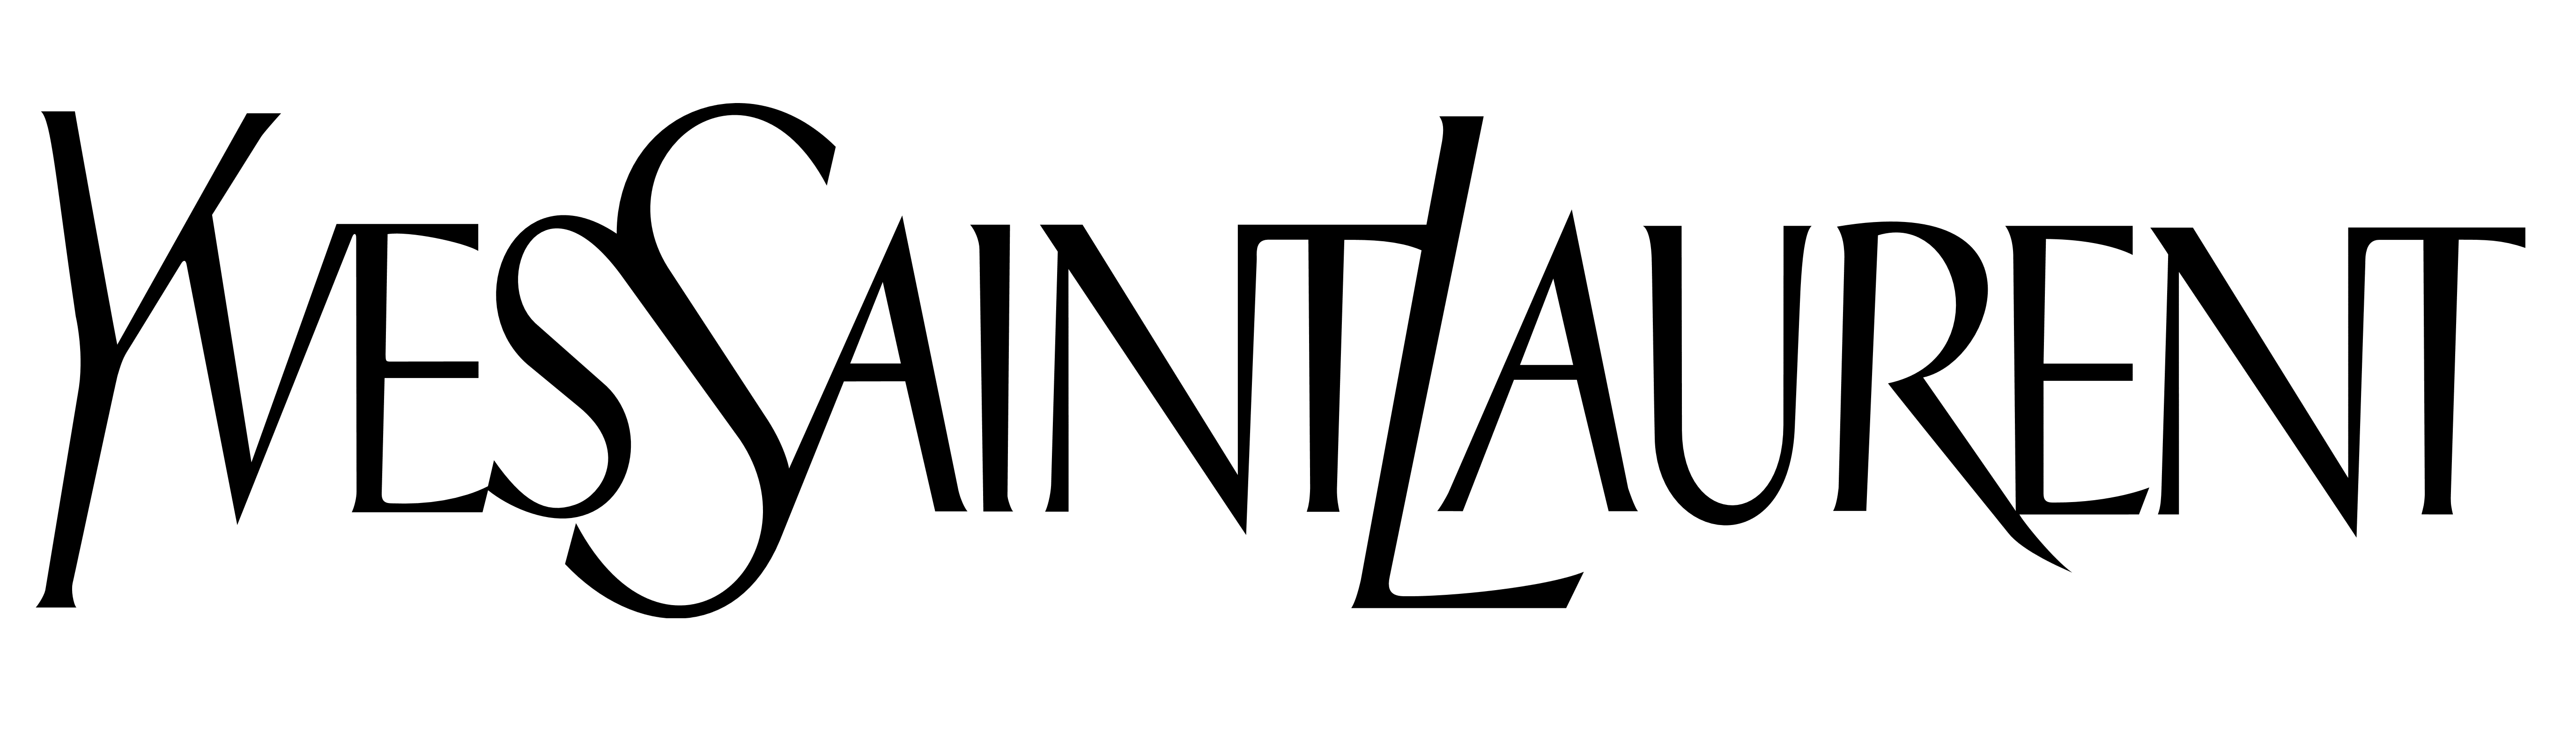 Yves Saint Laurent (YSL) logo, logotype